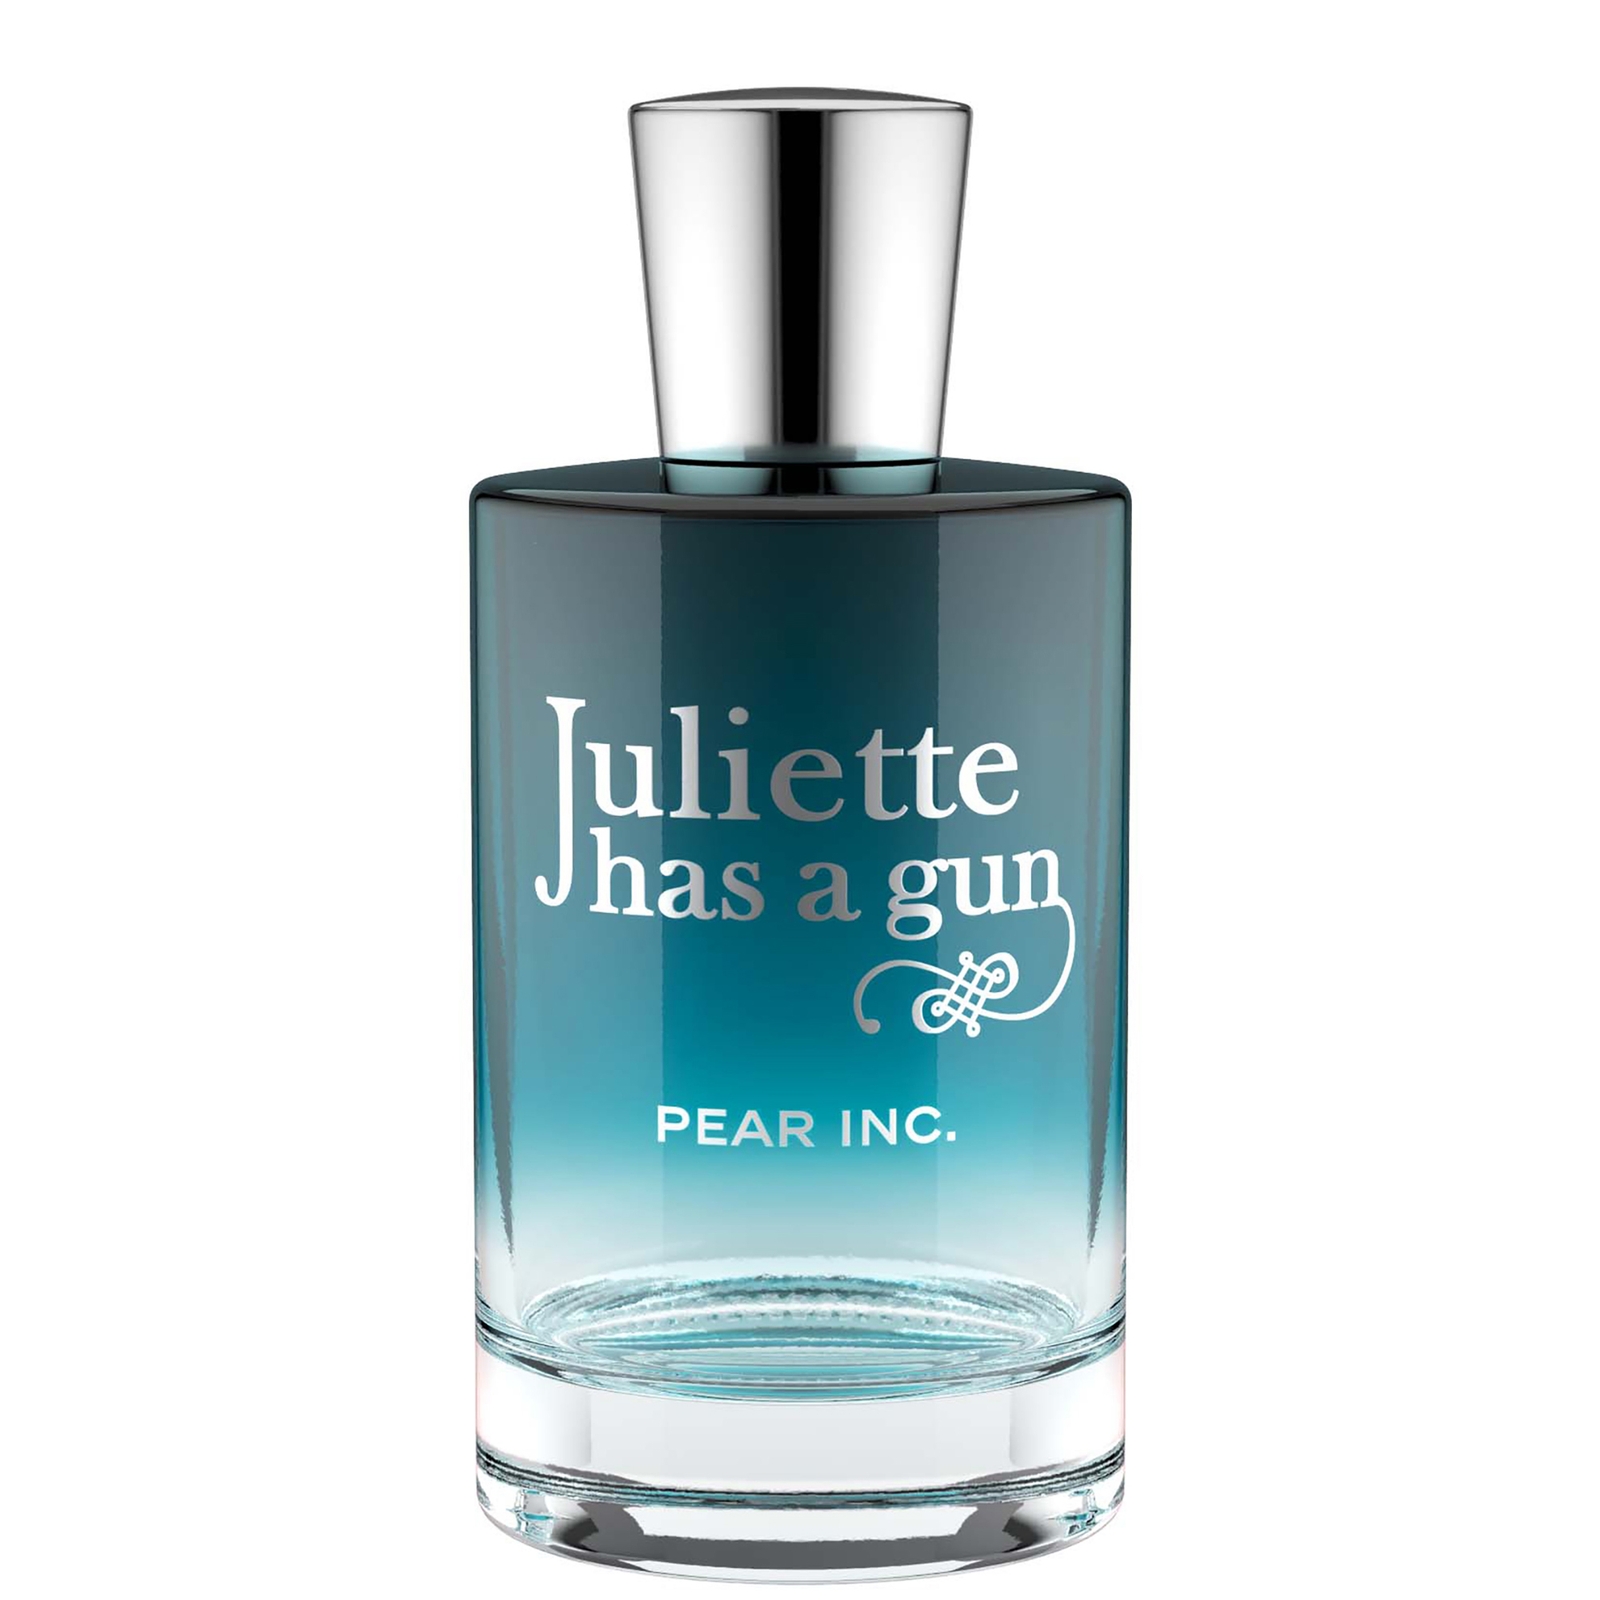 Photos - Women's Fragrance Juliette Has a Gun Pear Inc. Eau de Parfum 100ml JPPEAR100 